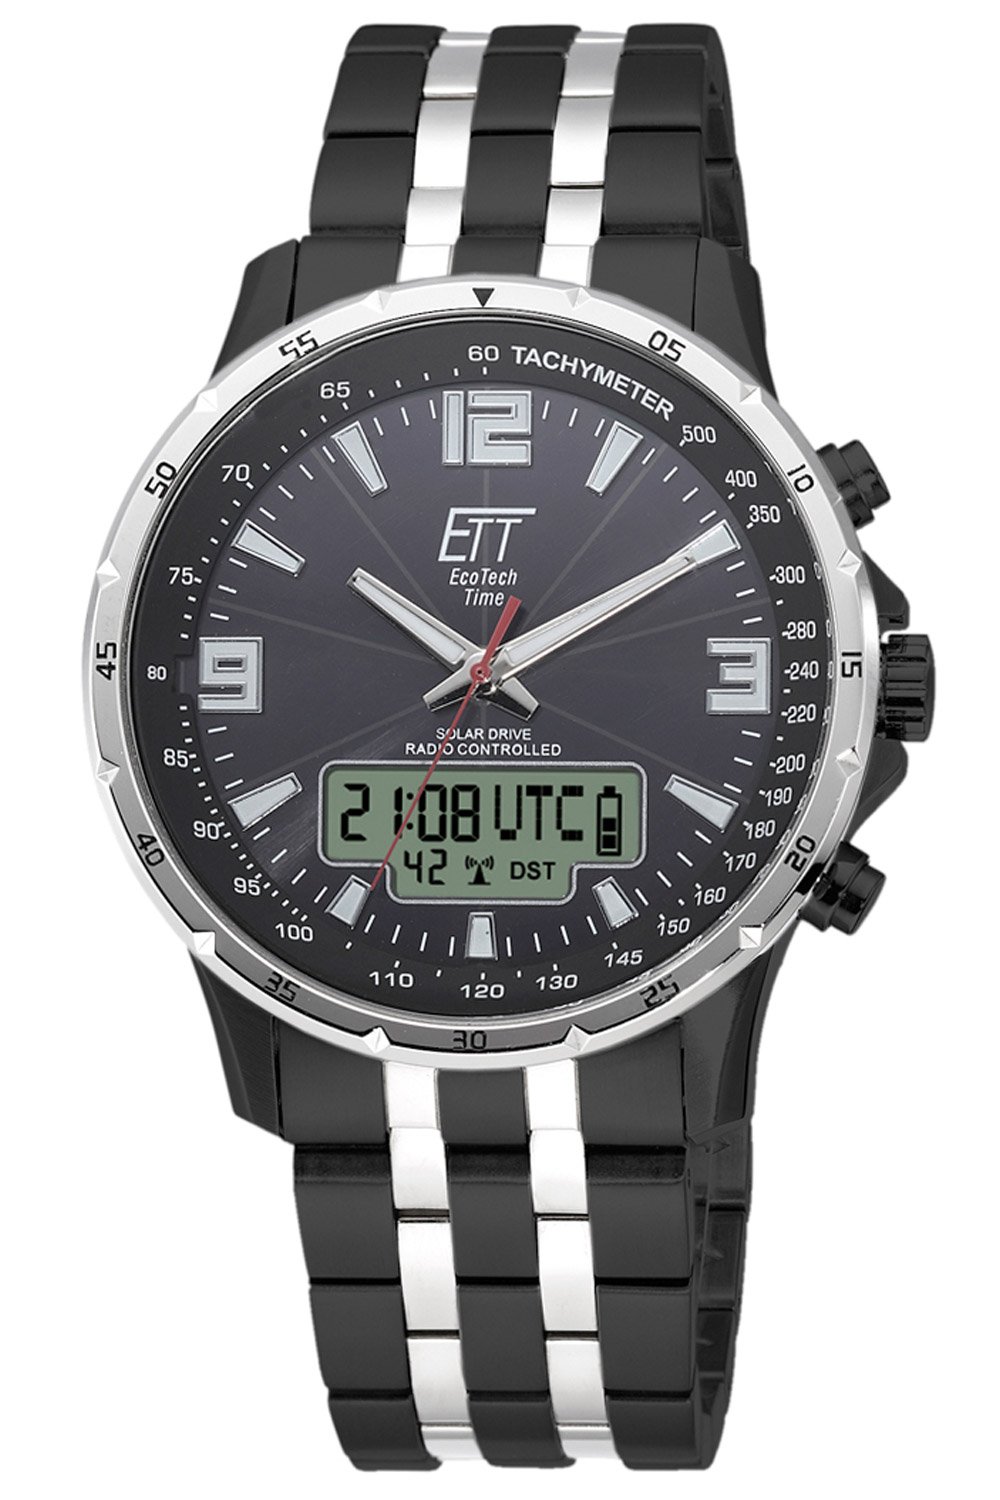 ETT Eco Tech Time Radio-Controlled Arctica Men\'s EGS Watch uhrcenter Solar -11568-21M • Black/Steel